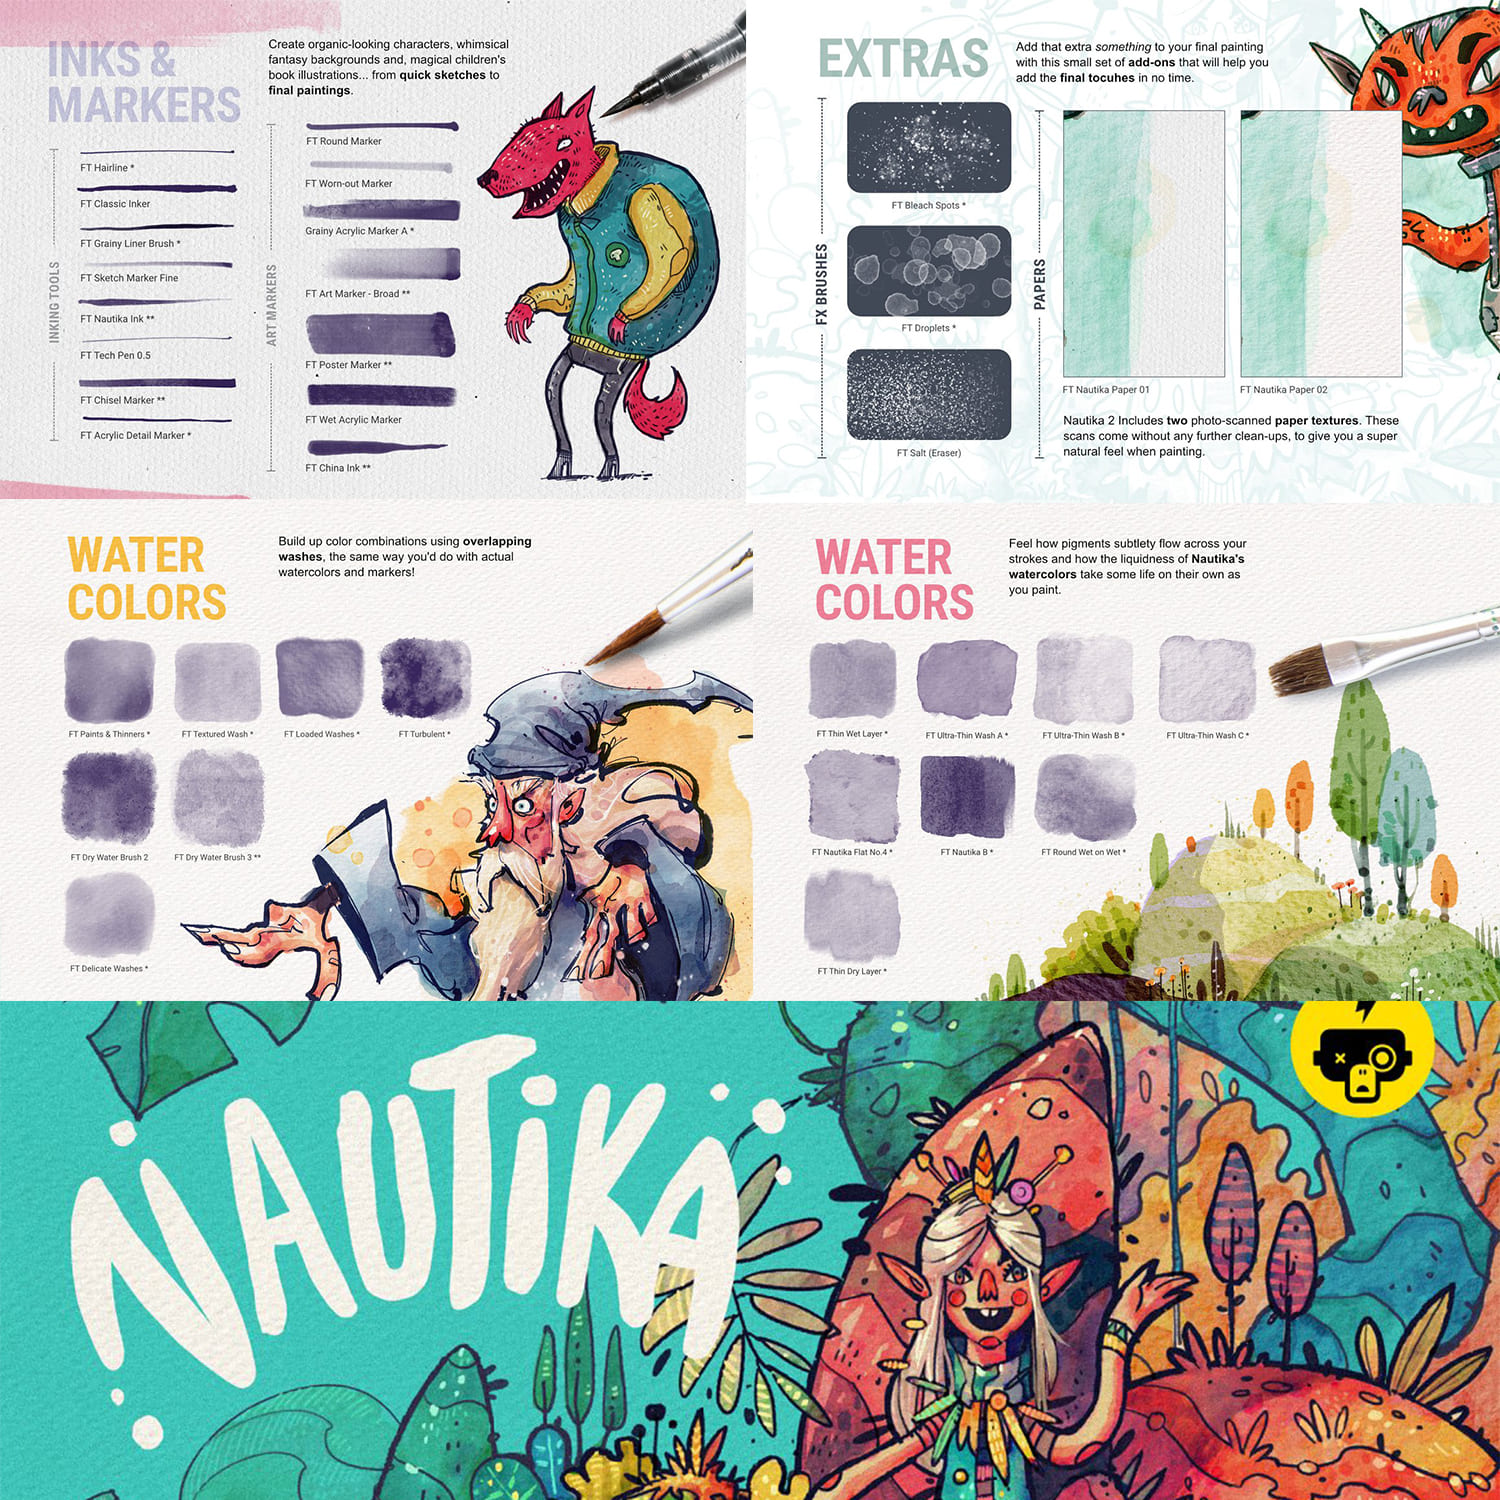 Nautika Procreate Brush Pack cover image.